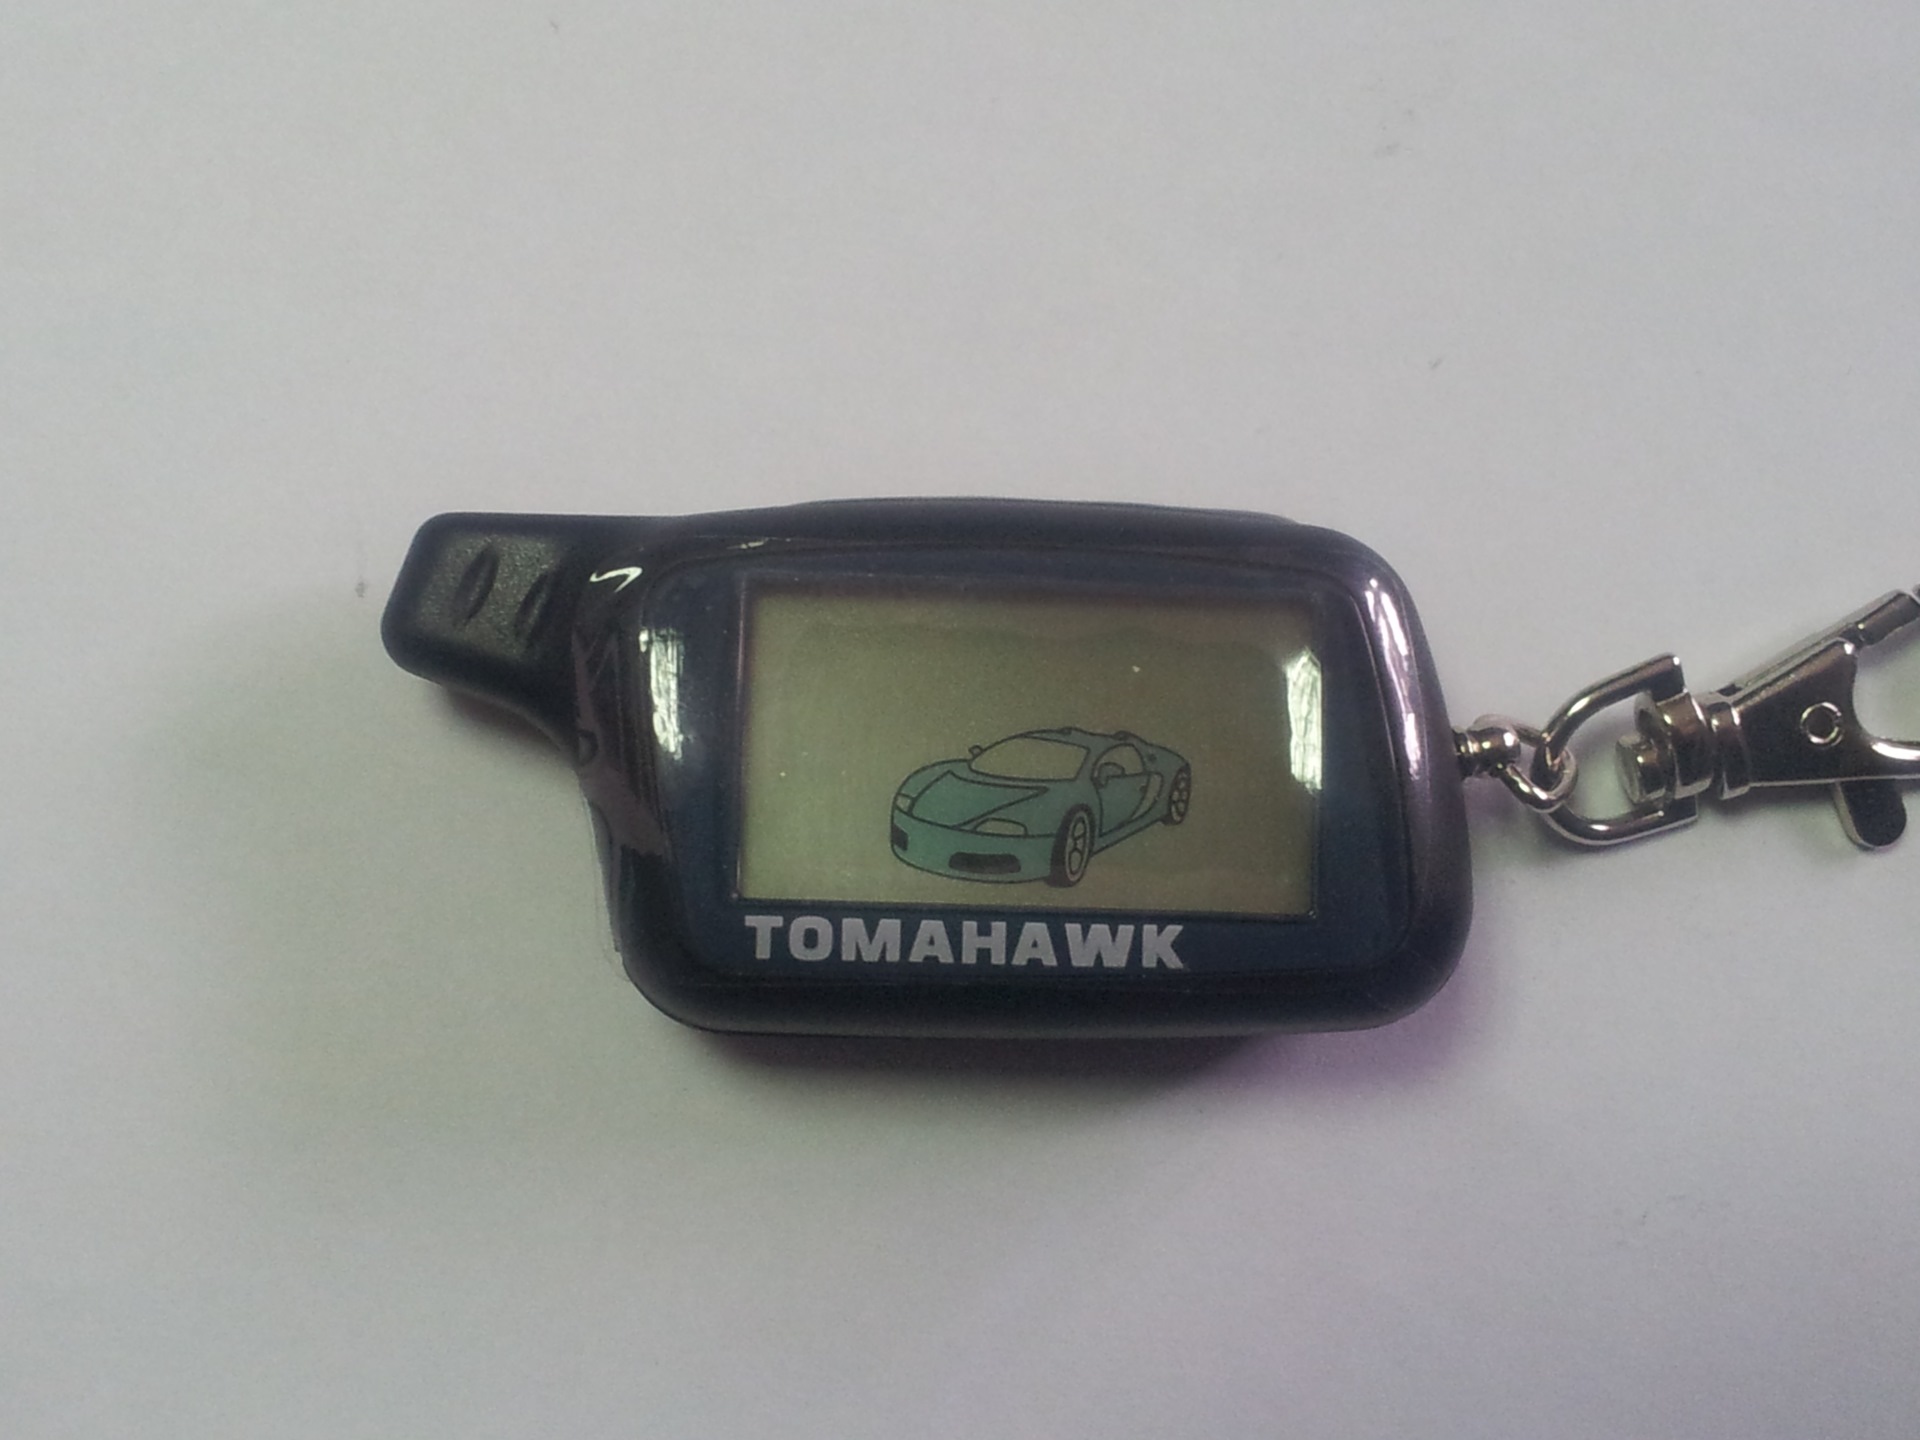 Tomahawk x5